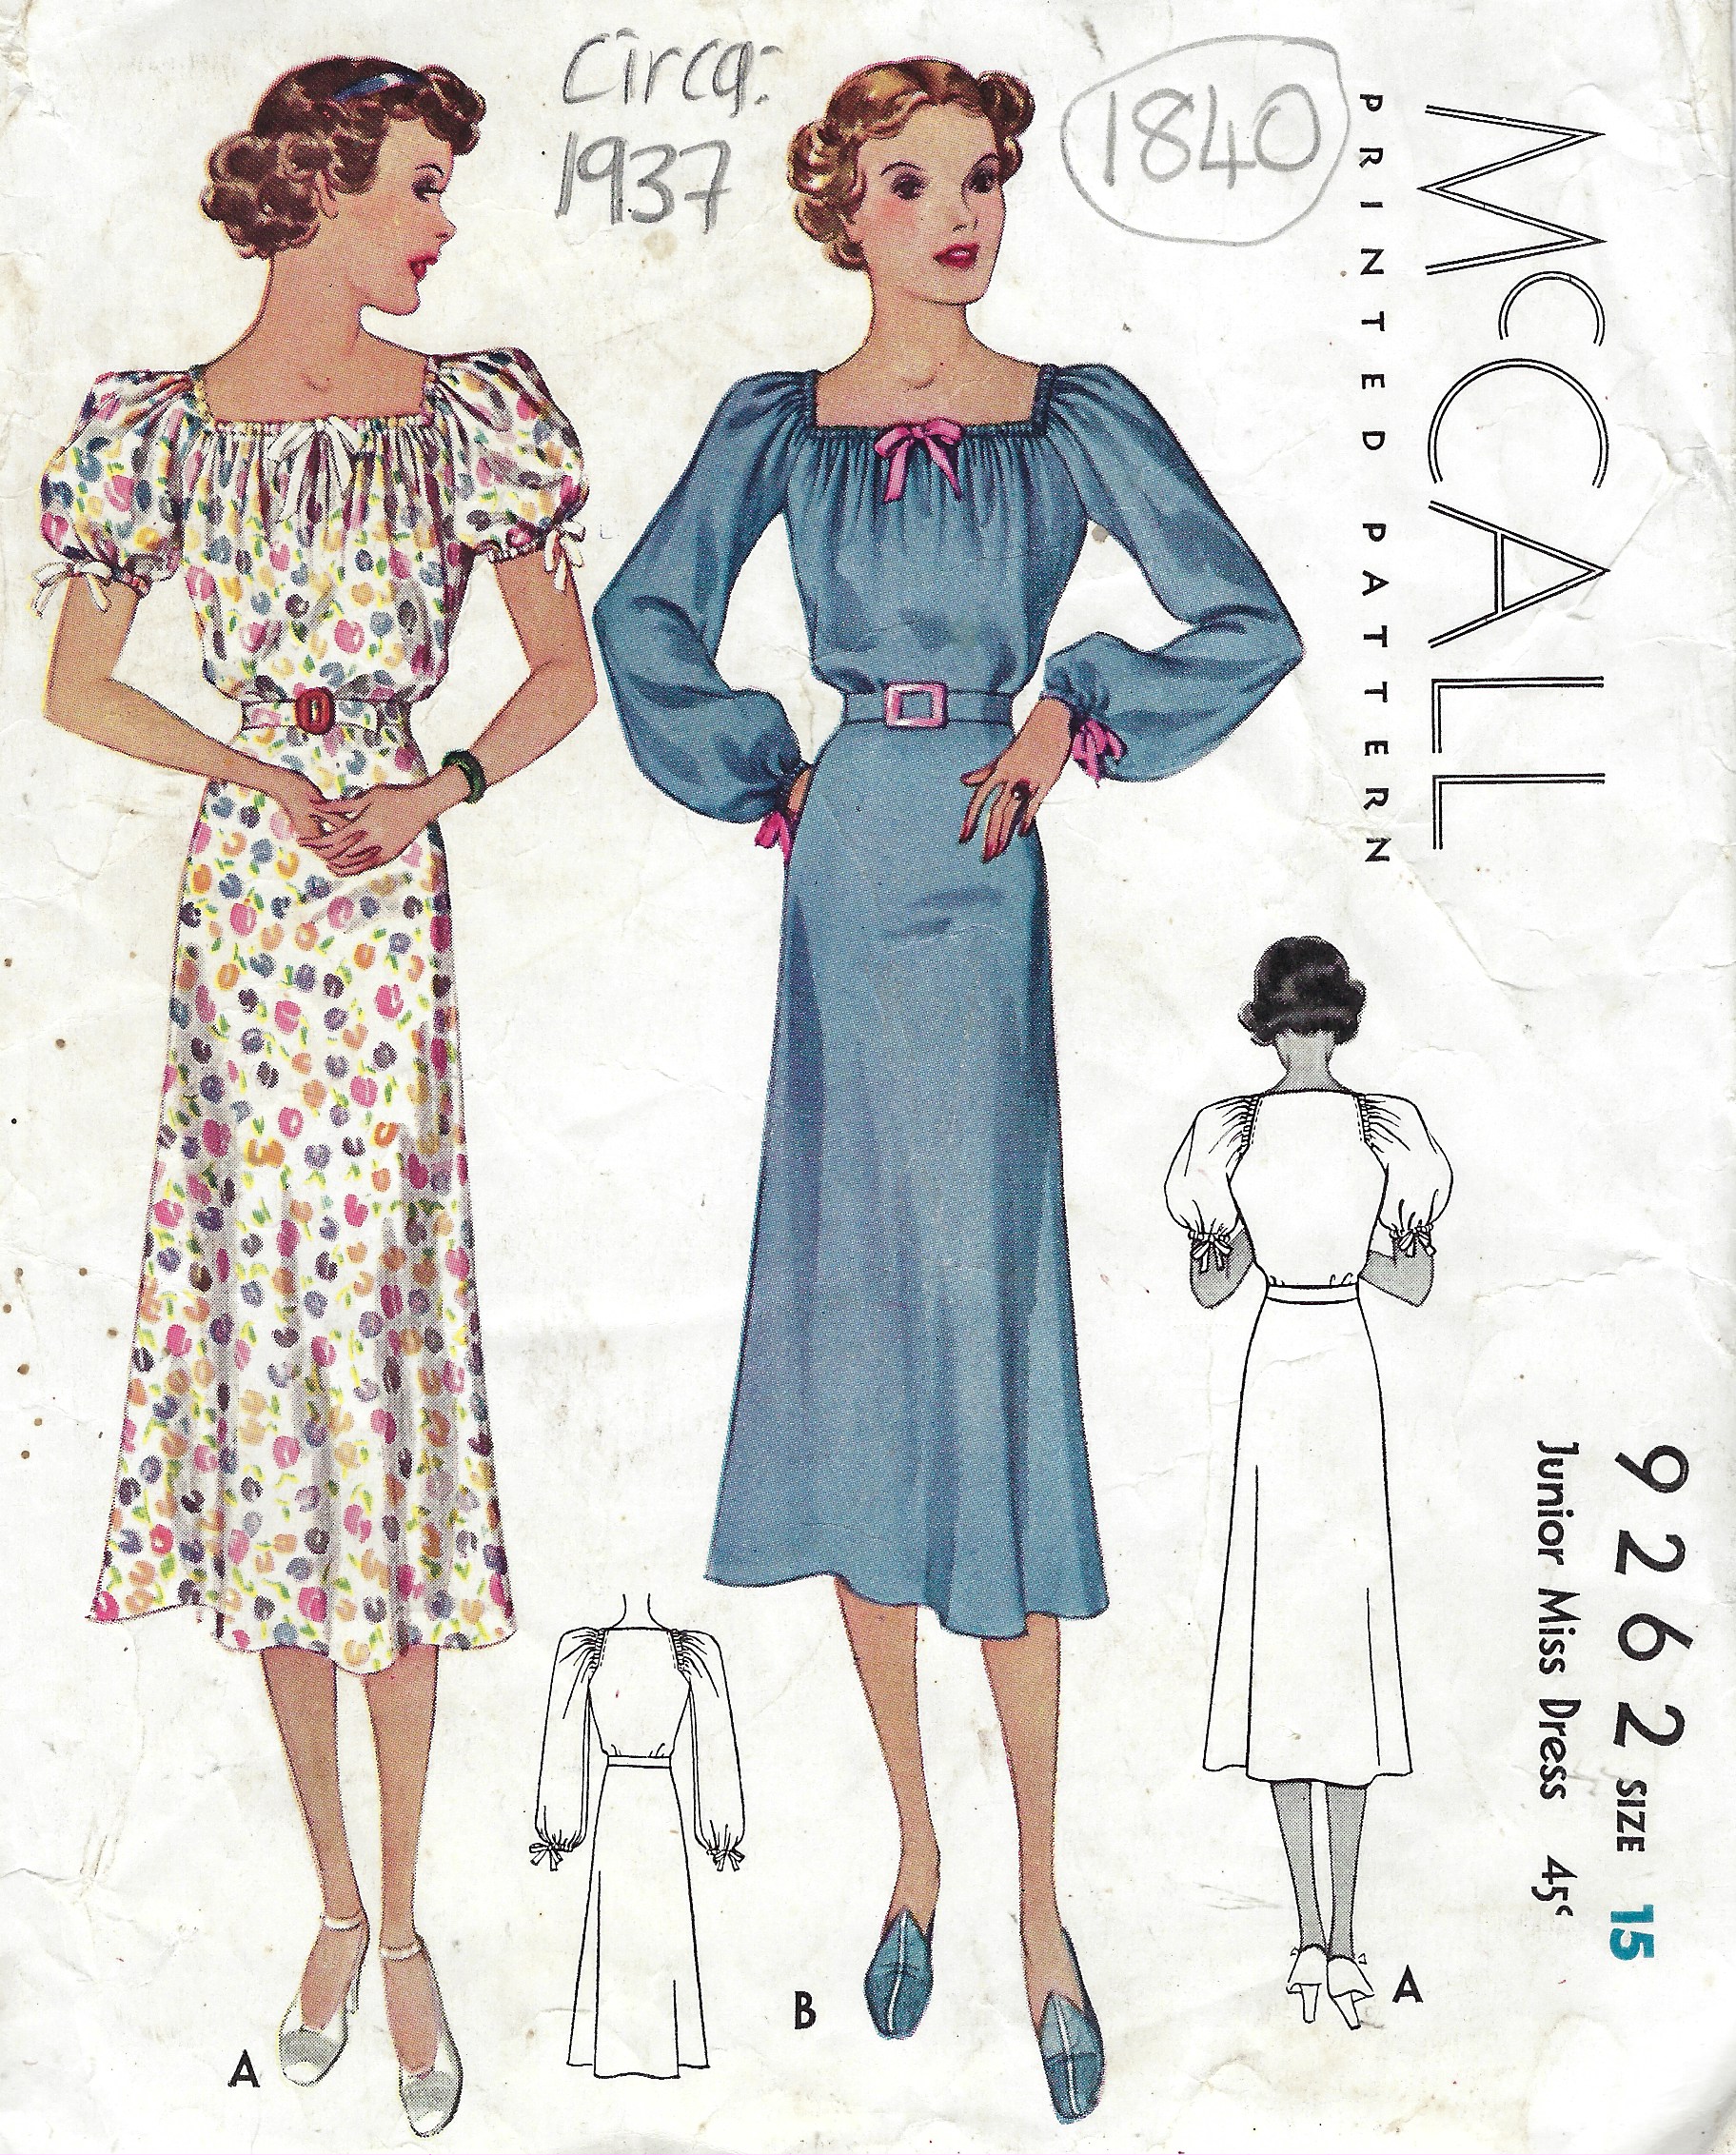 1937-vintage-sewing-pattern-b33-dress-1840-mccall-9262-the-vintage